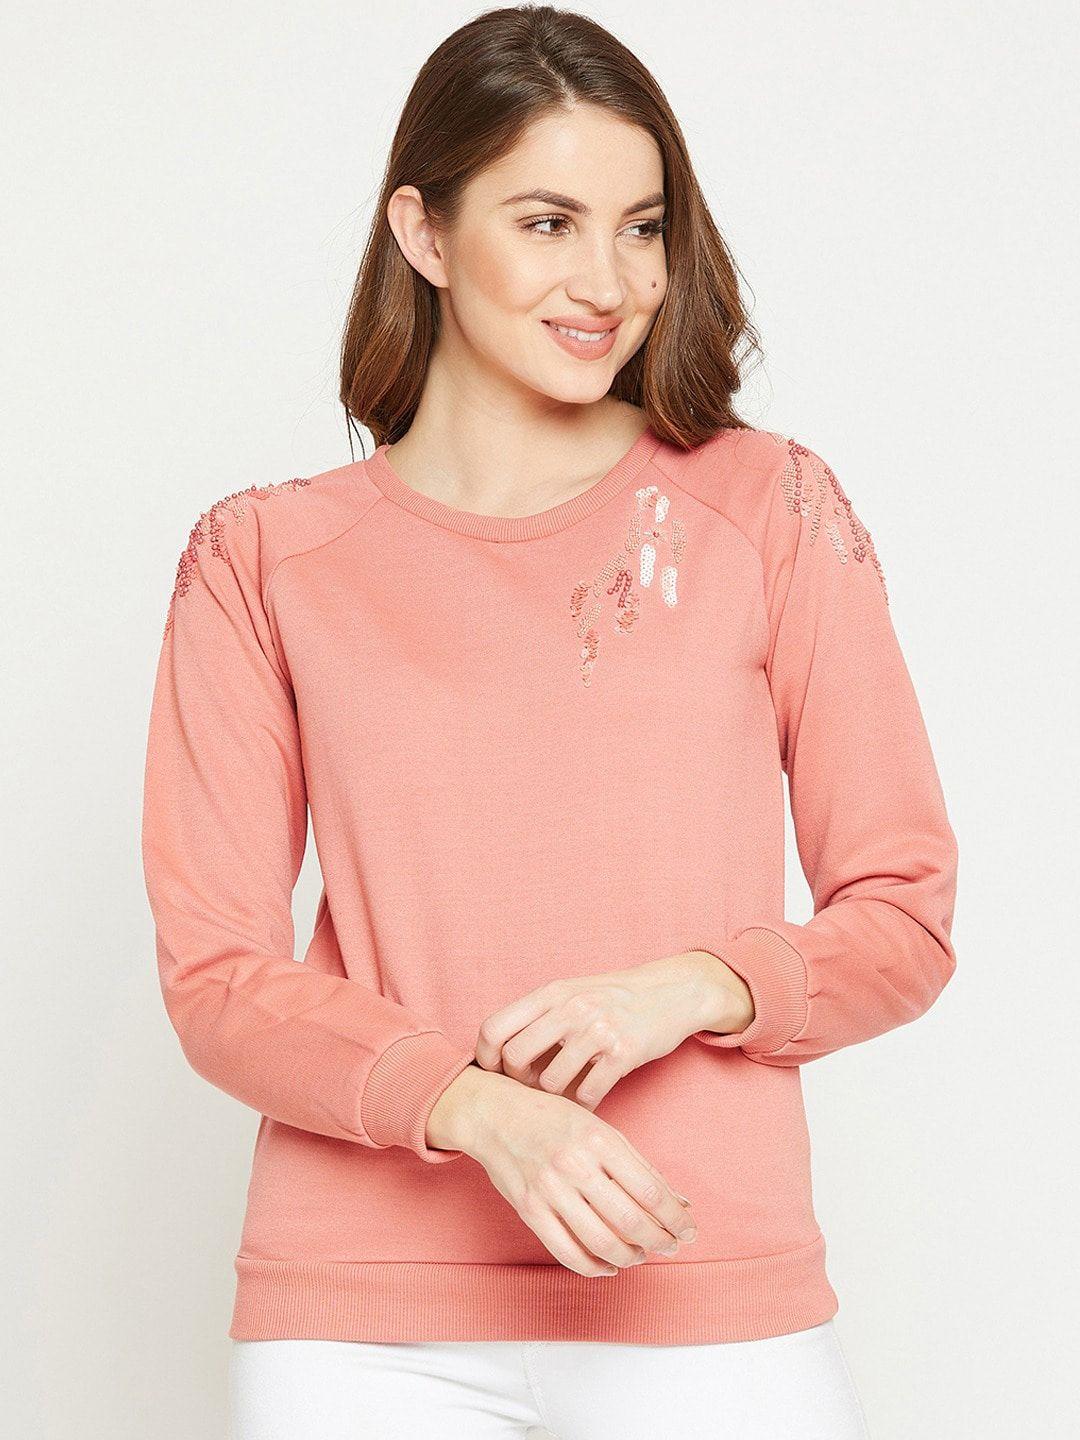 carlton london women pink solid sweatshirt